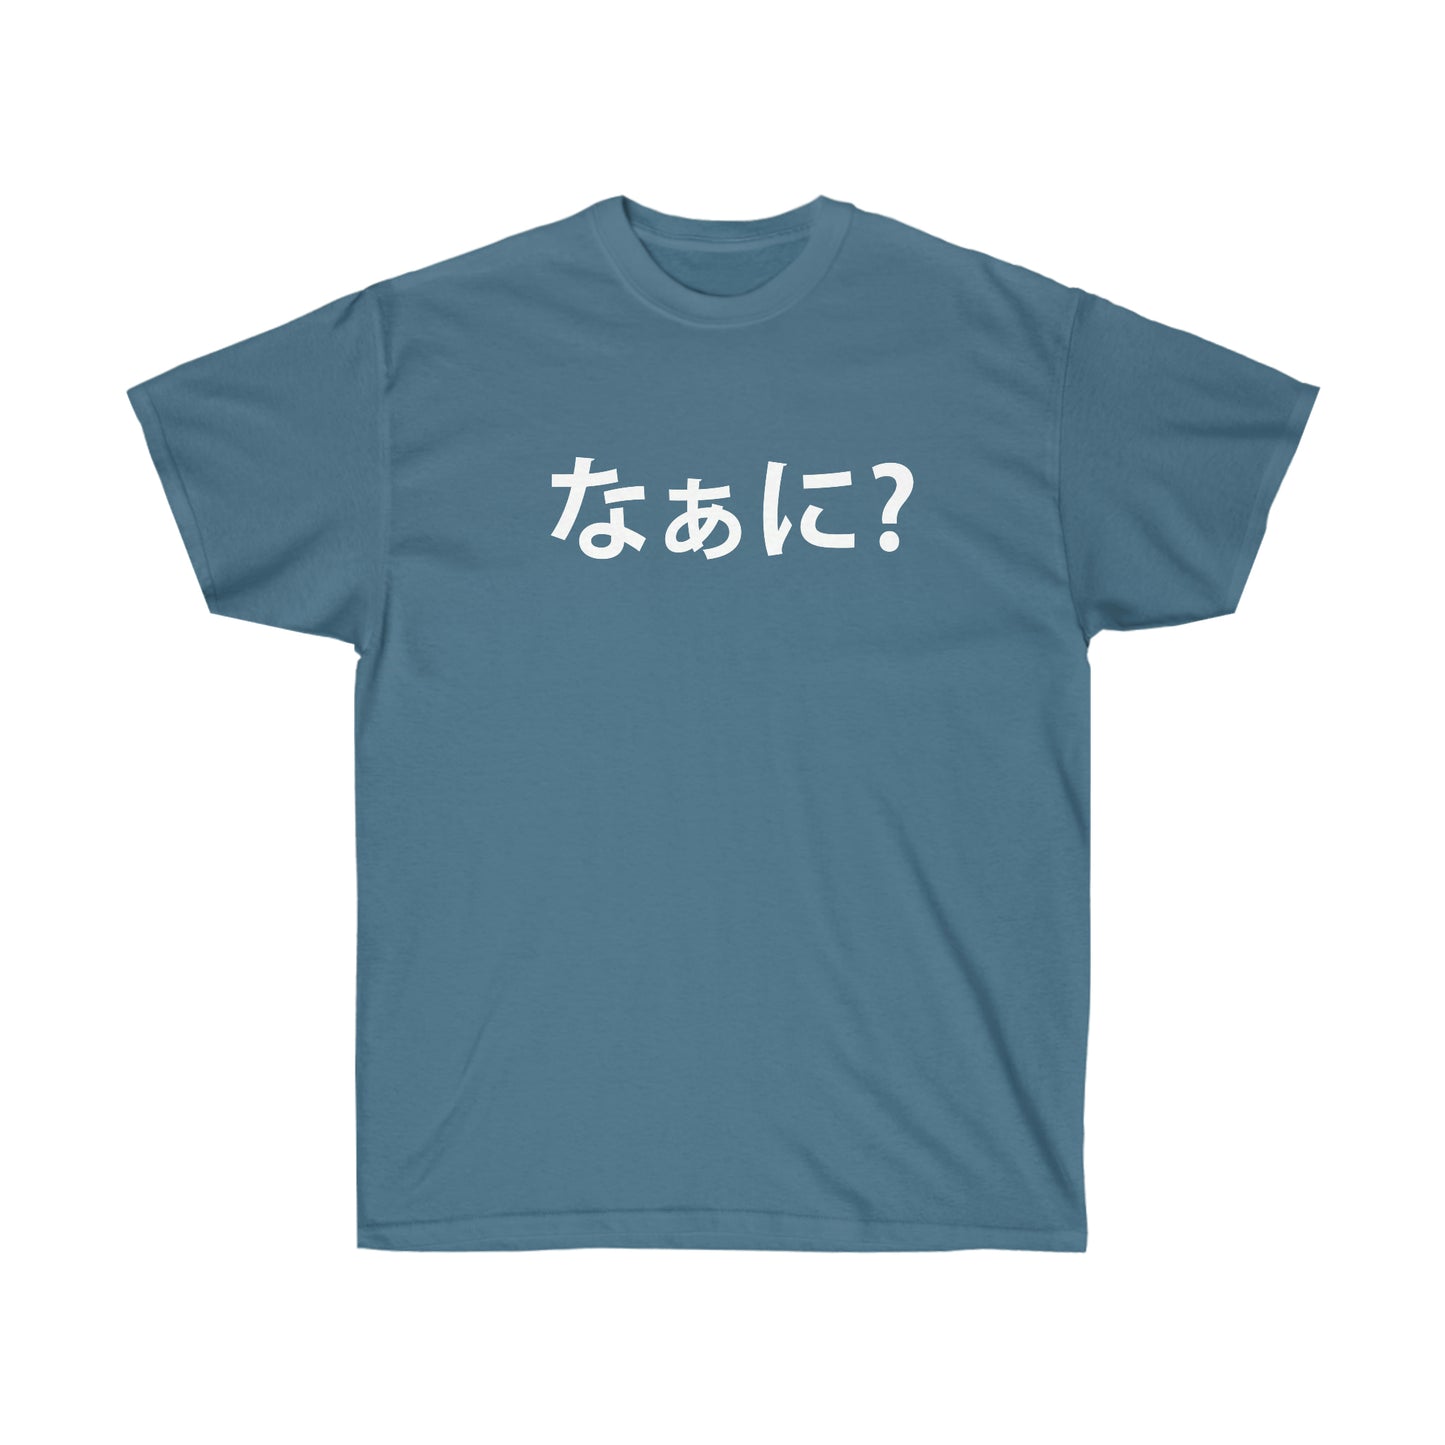 NANI? shirt What in Japanese Nani T-Shirt tee